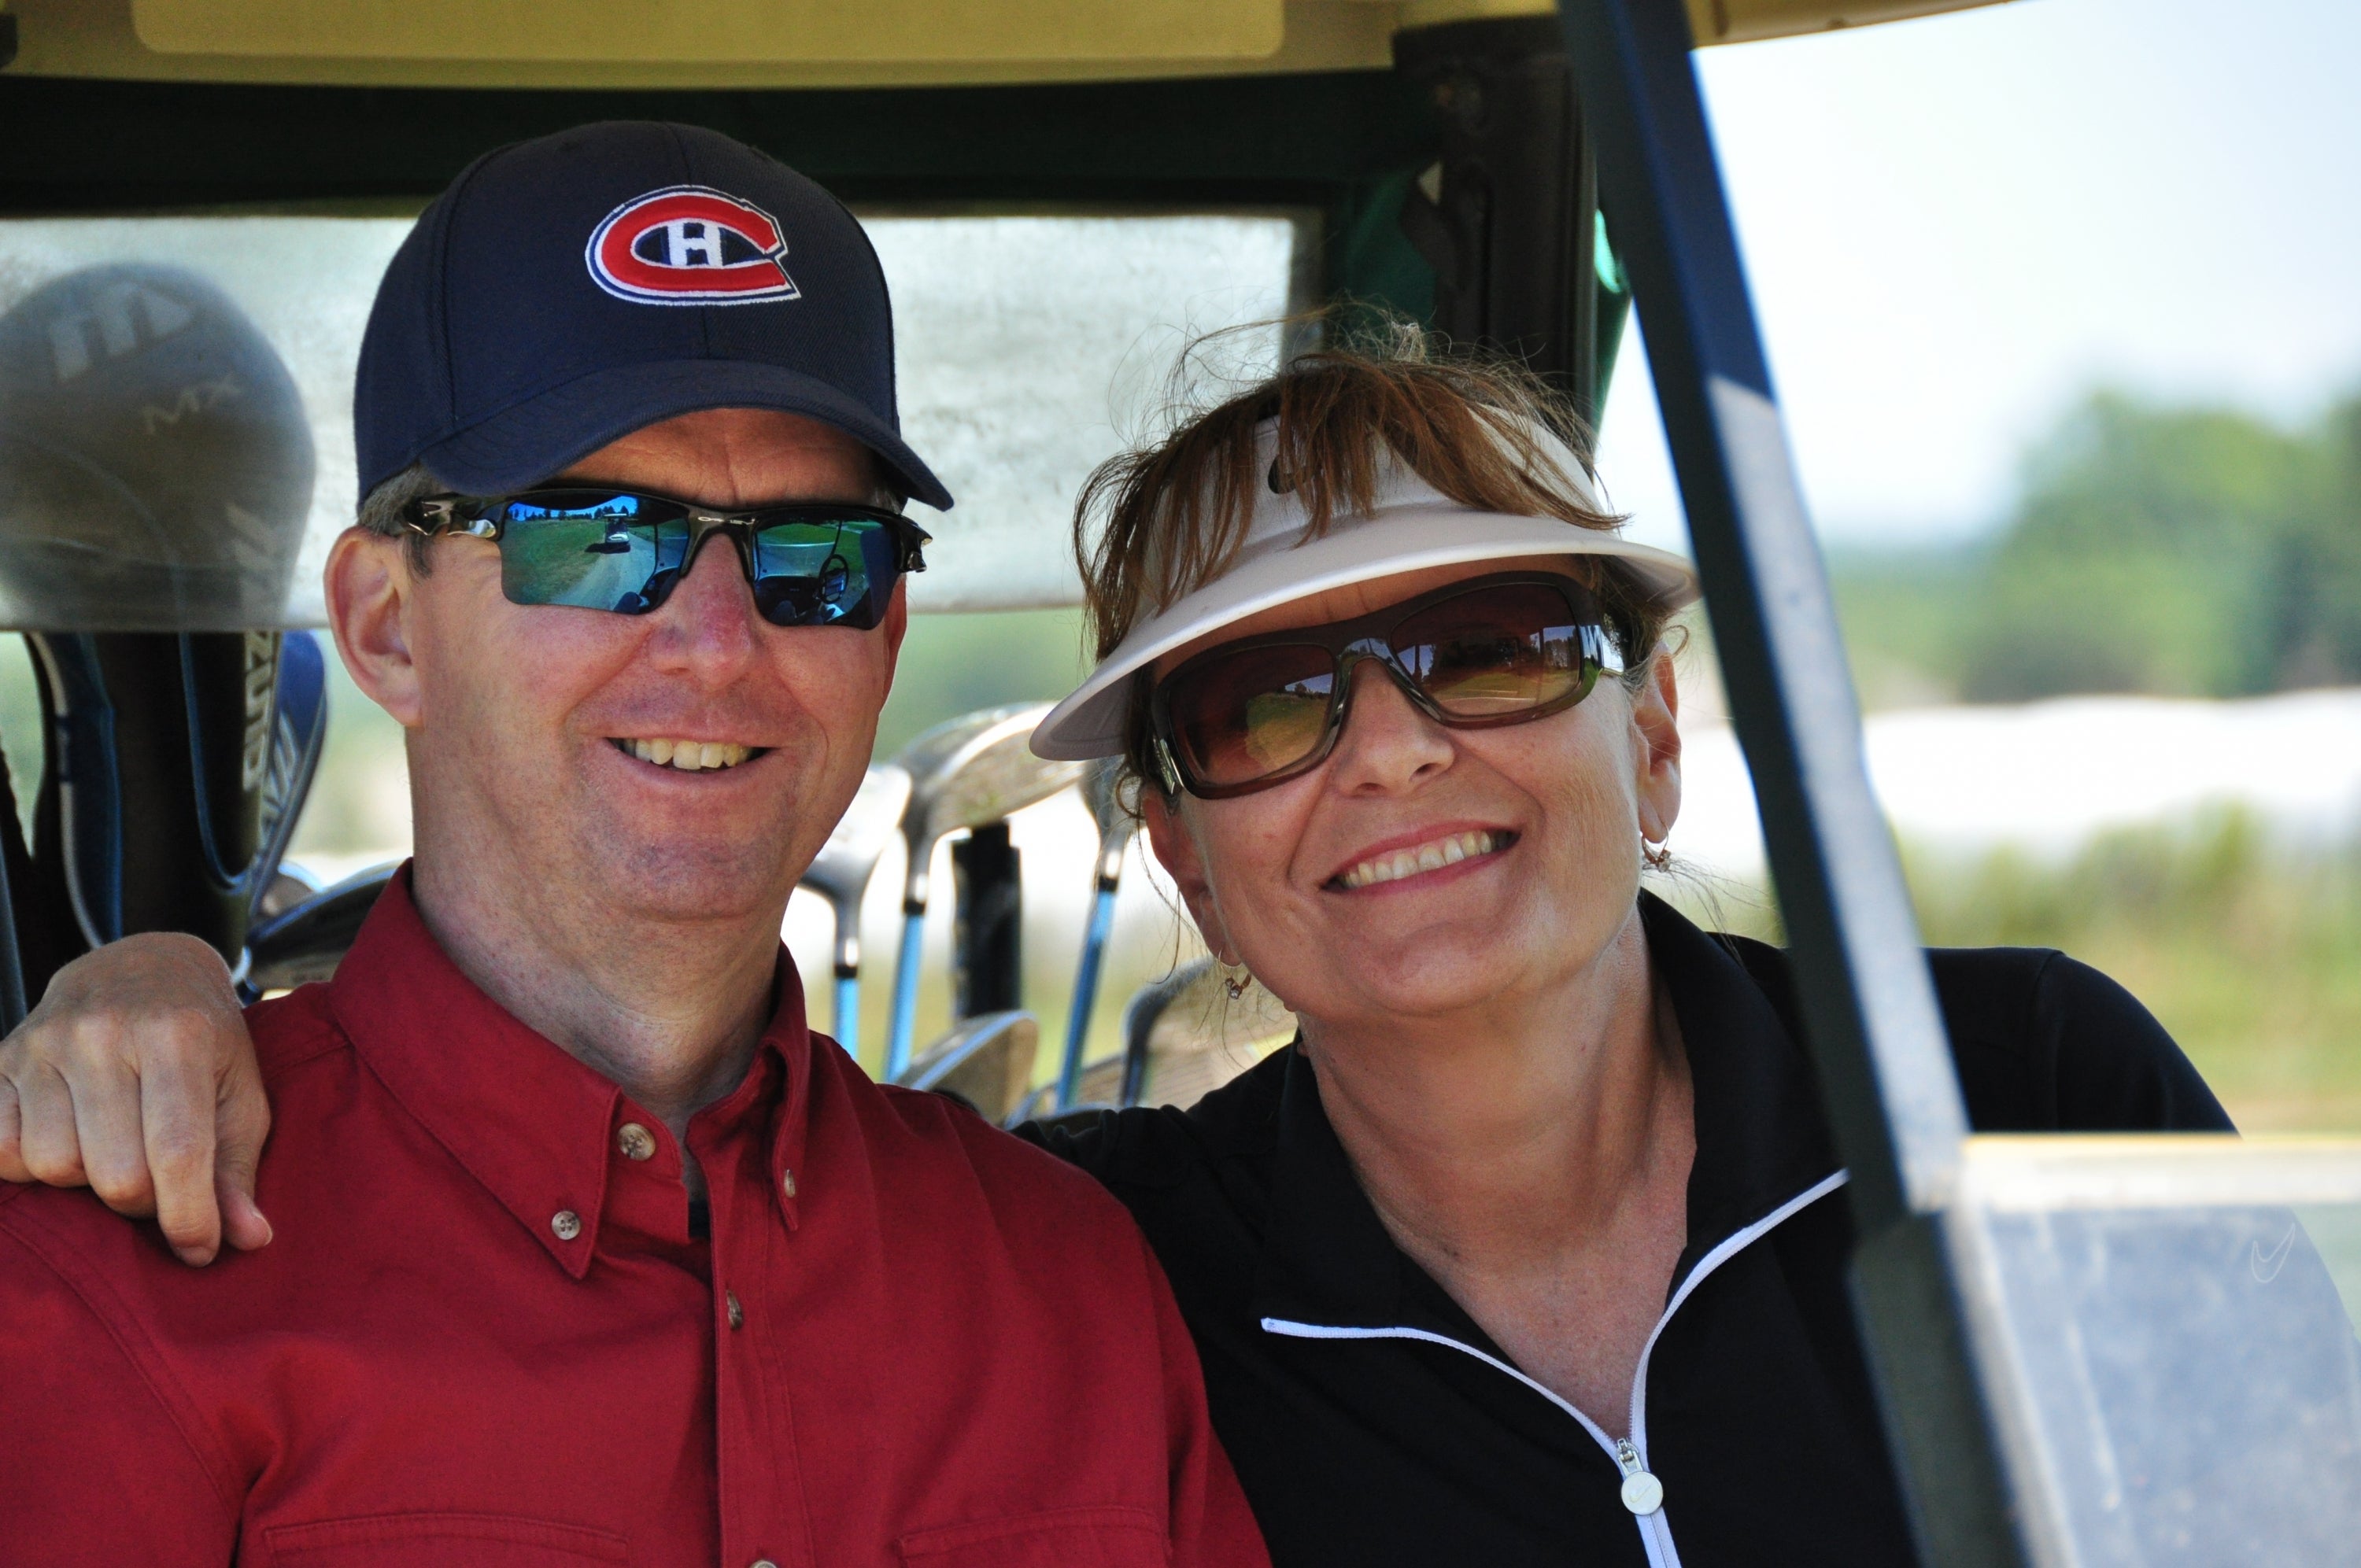 Richard and Linda on a golf cart